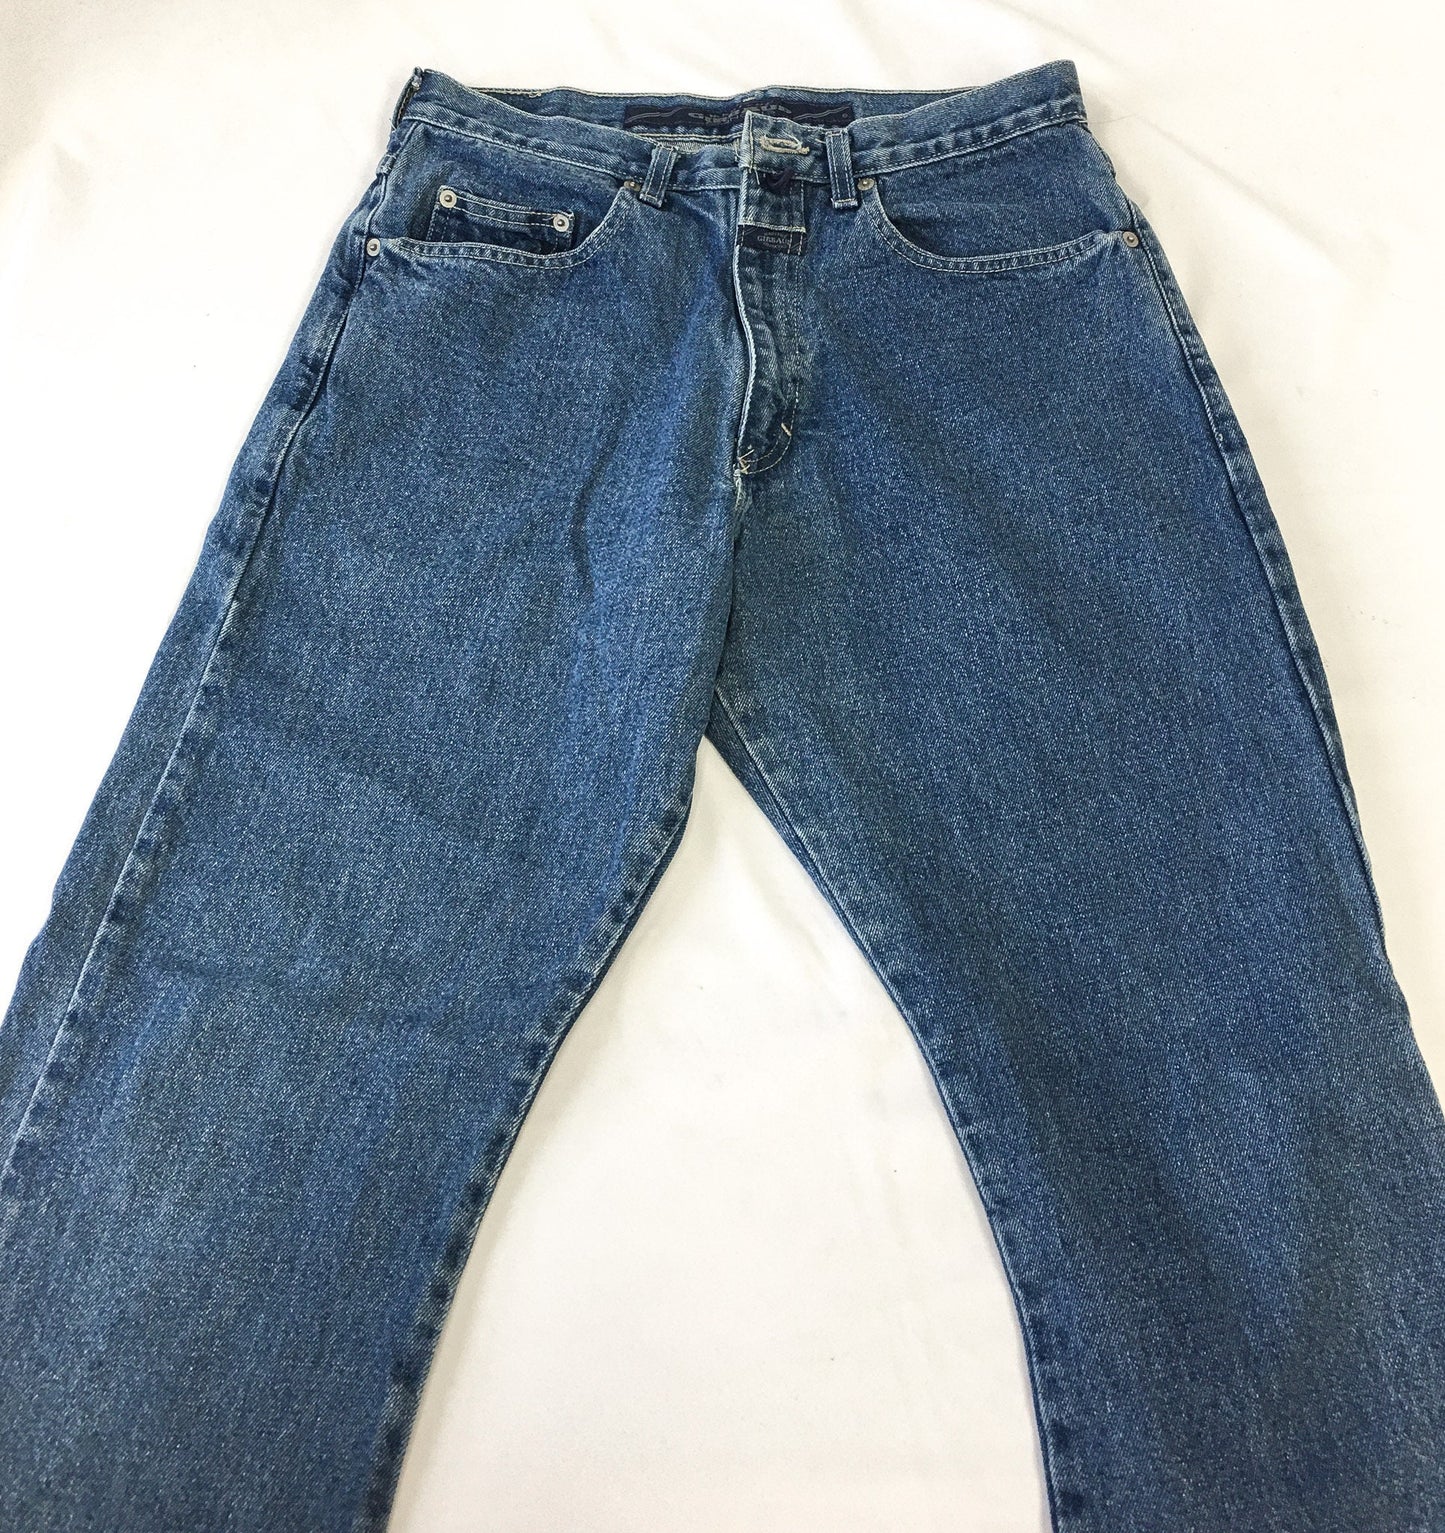 Vintage 90s Matithe Francois Girbaud Dark Wash Straight Leg Jeans, Men's Sz. 31, Made in USA